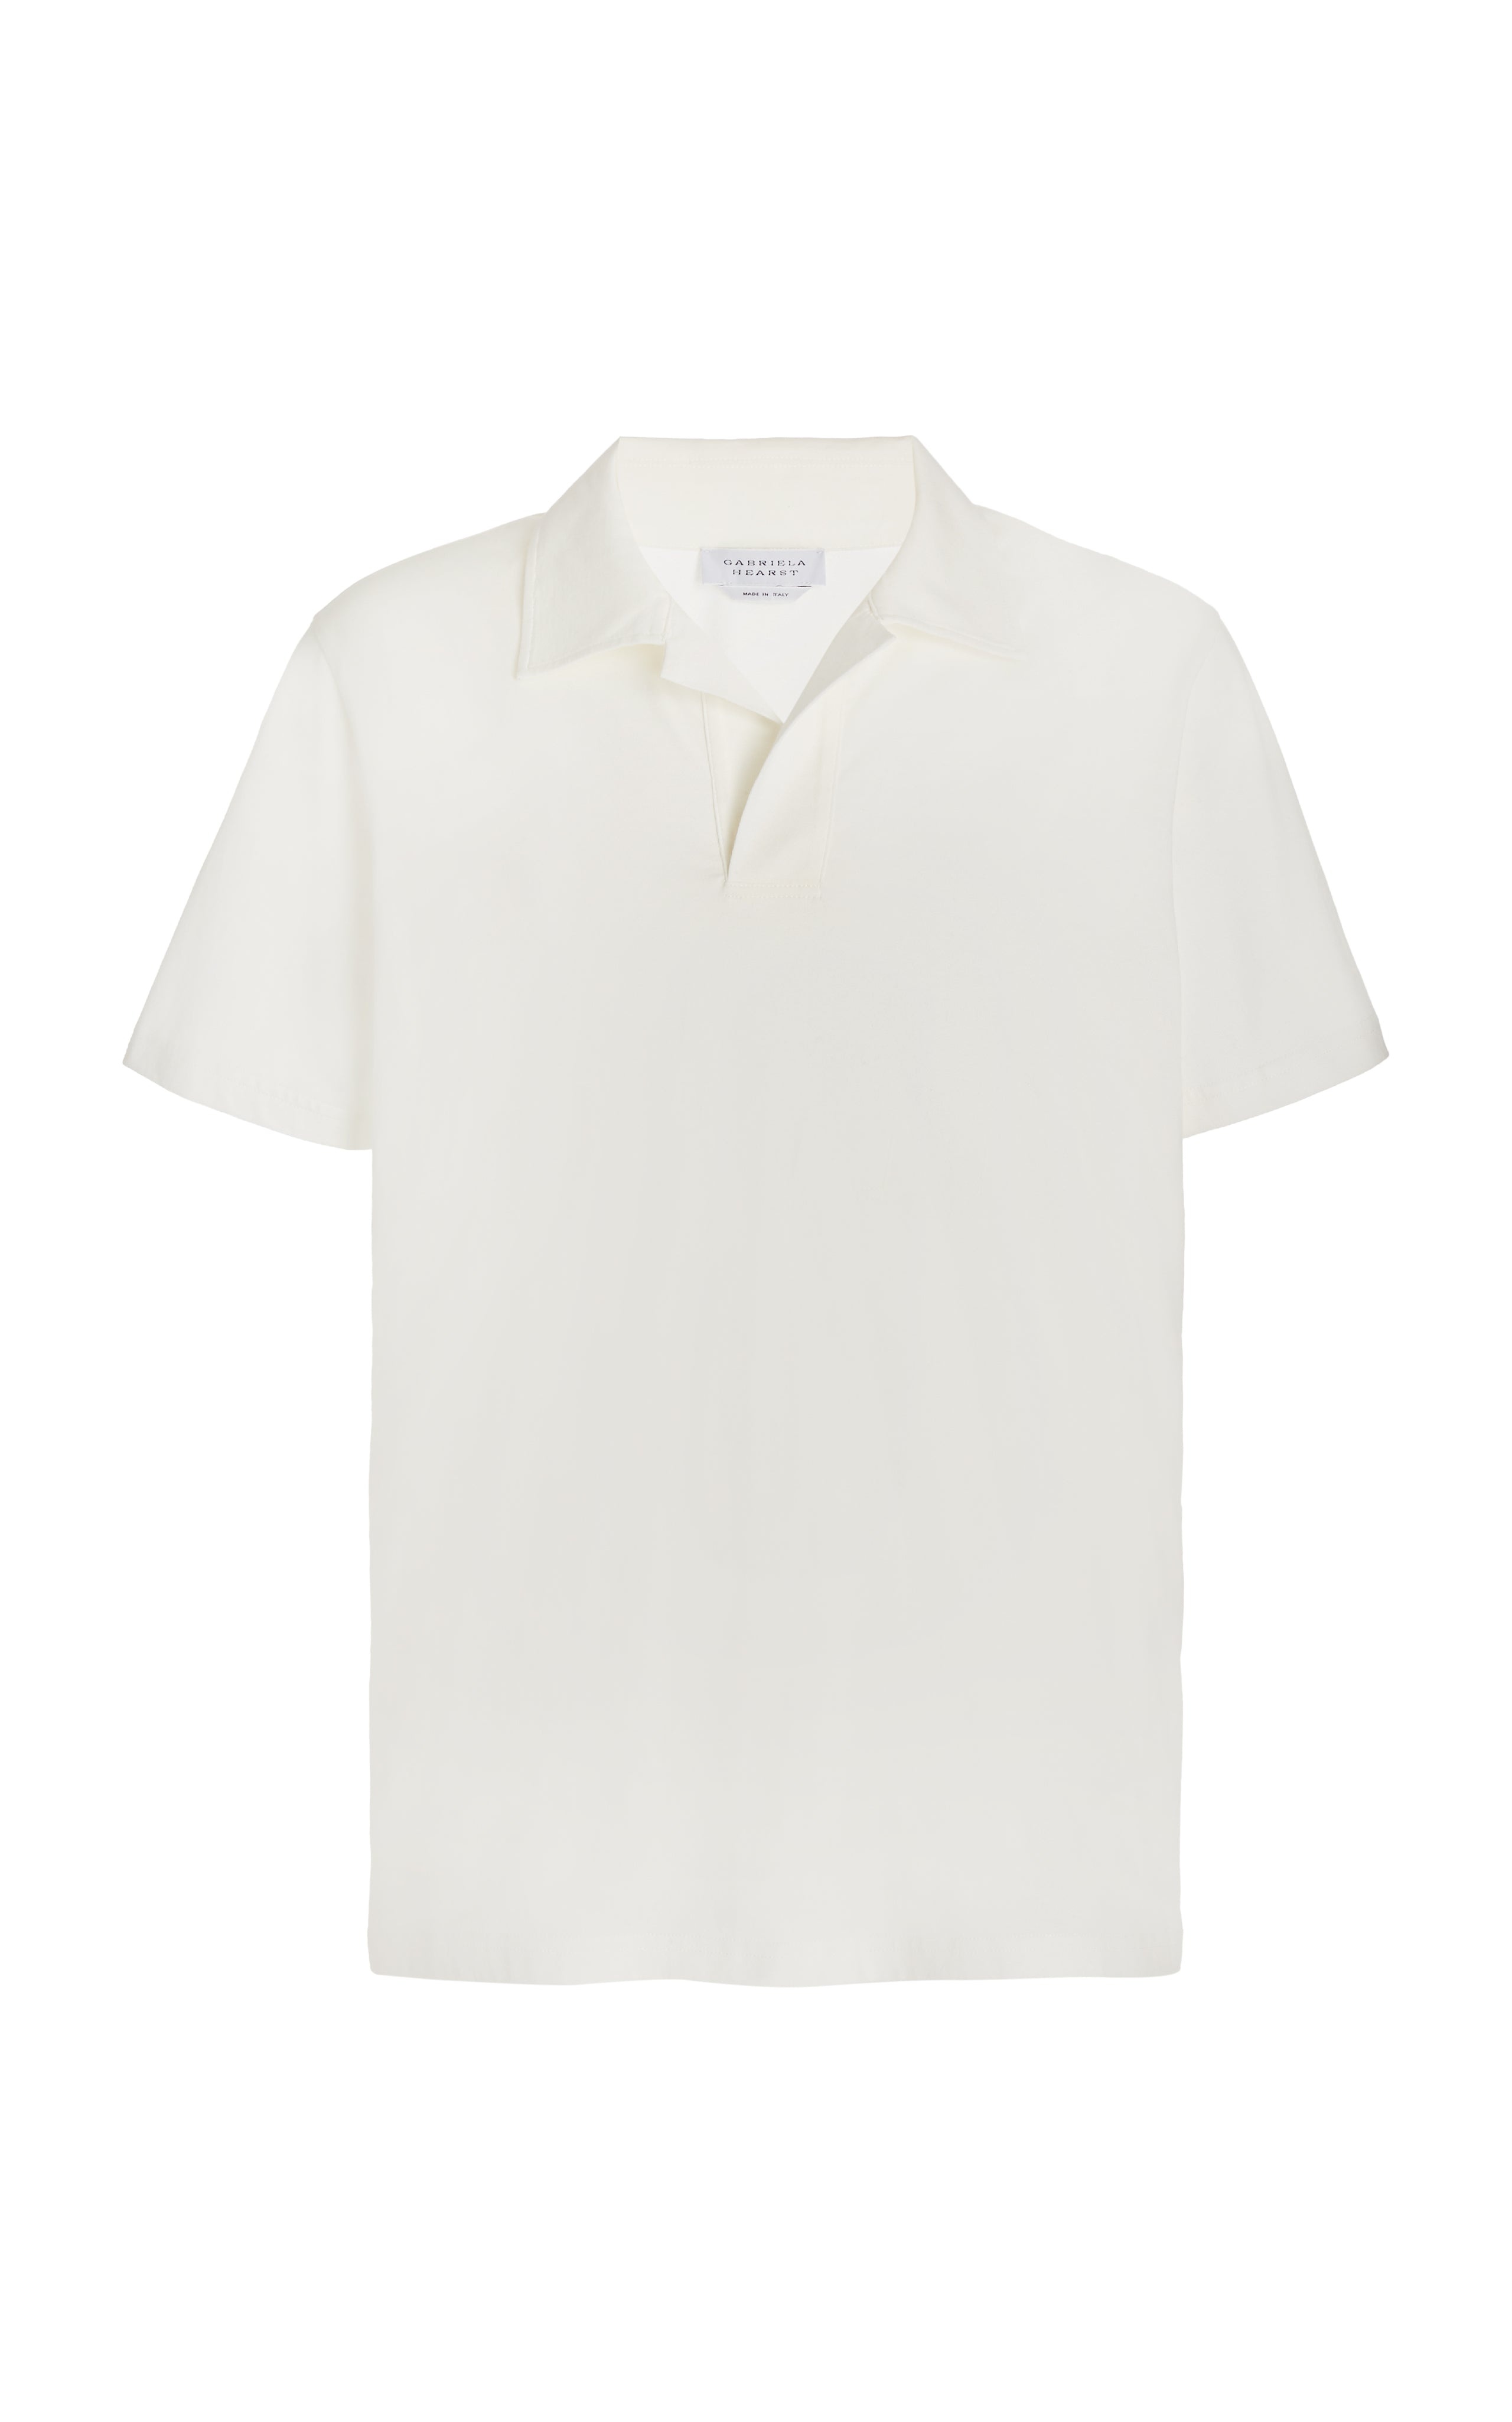 Jaime Short Sleeve Polo in White Cotton - 1